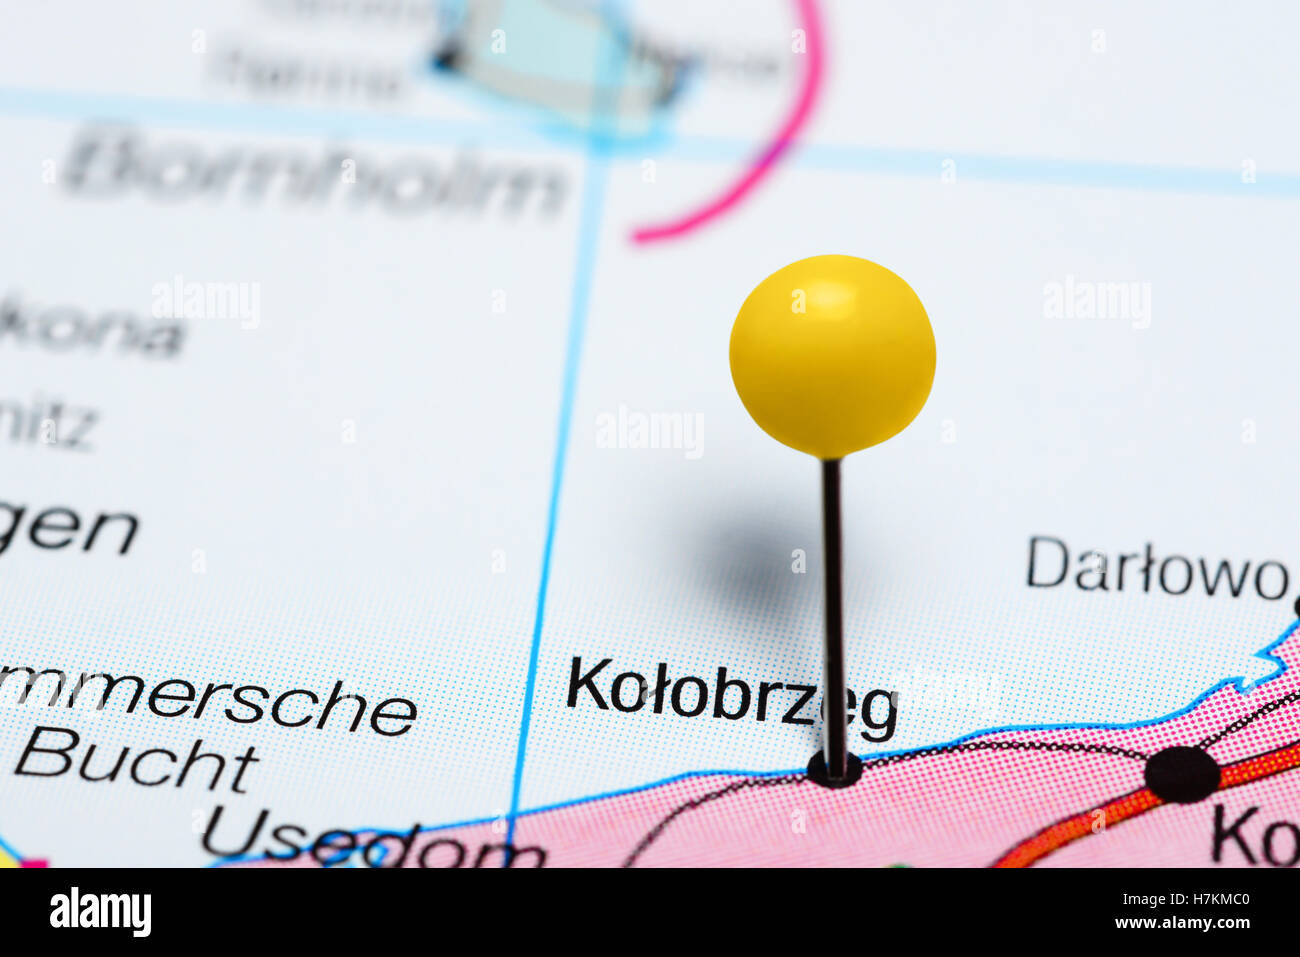 Kolobrzeg pinned on a map of Poland Stock Photo